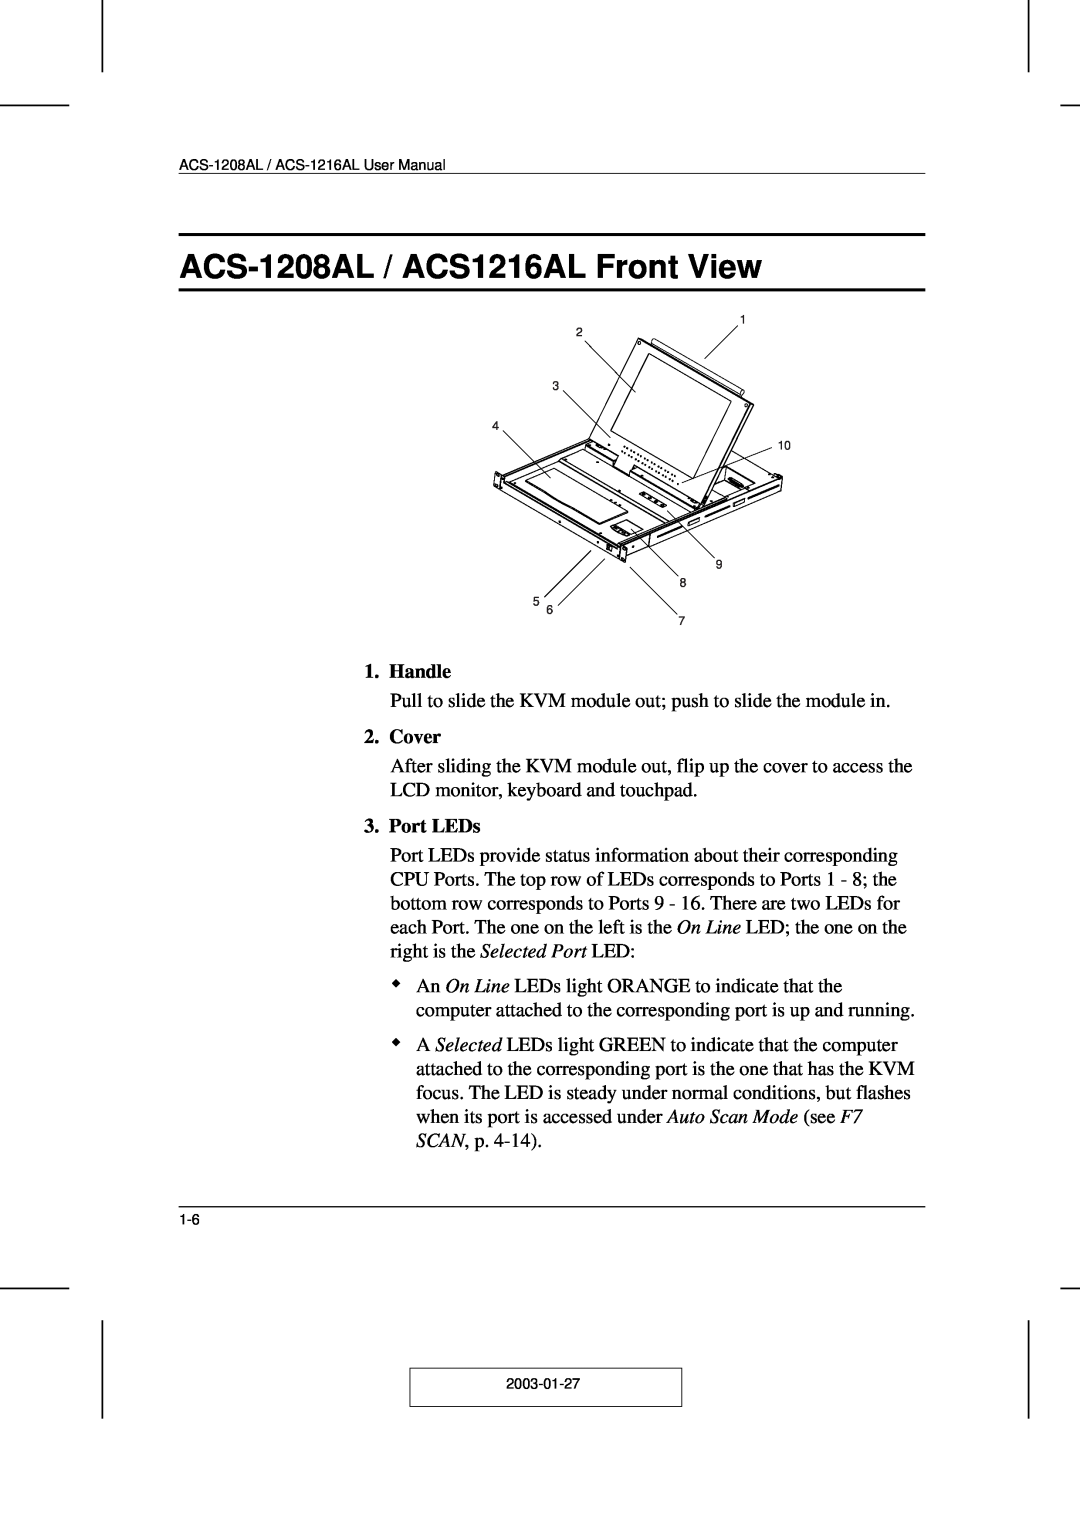 ATEN Technology ACS-1216AL user manual ACS-1208AL / ACS1216AL Front View, Handle, Cover, Port LEDs 